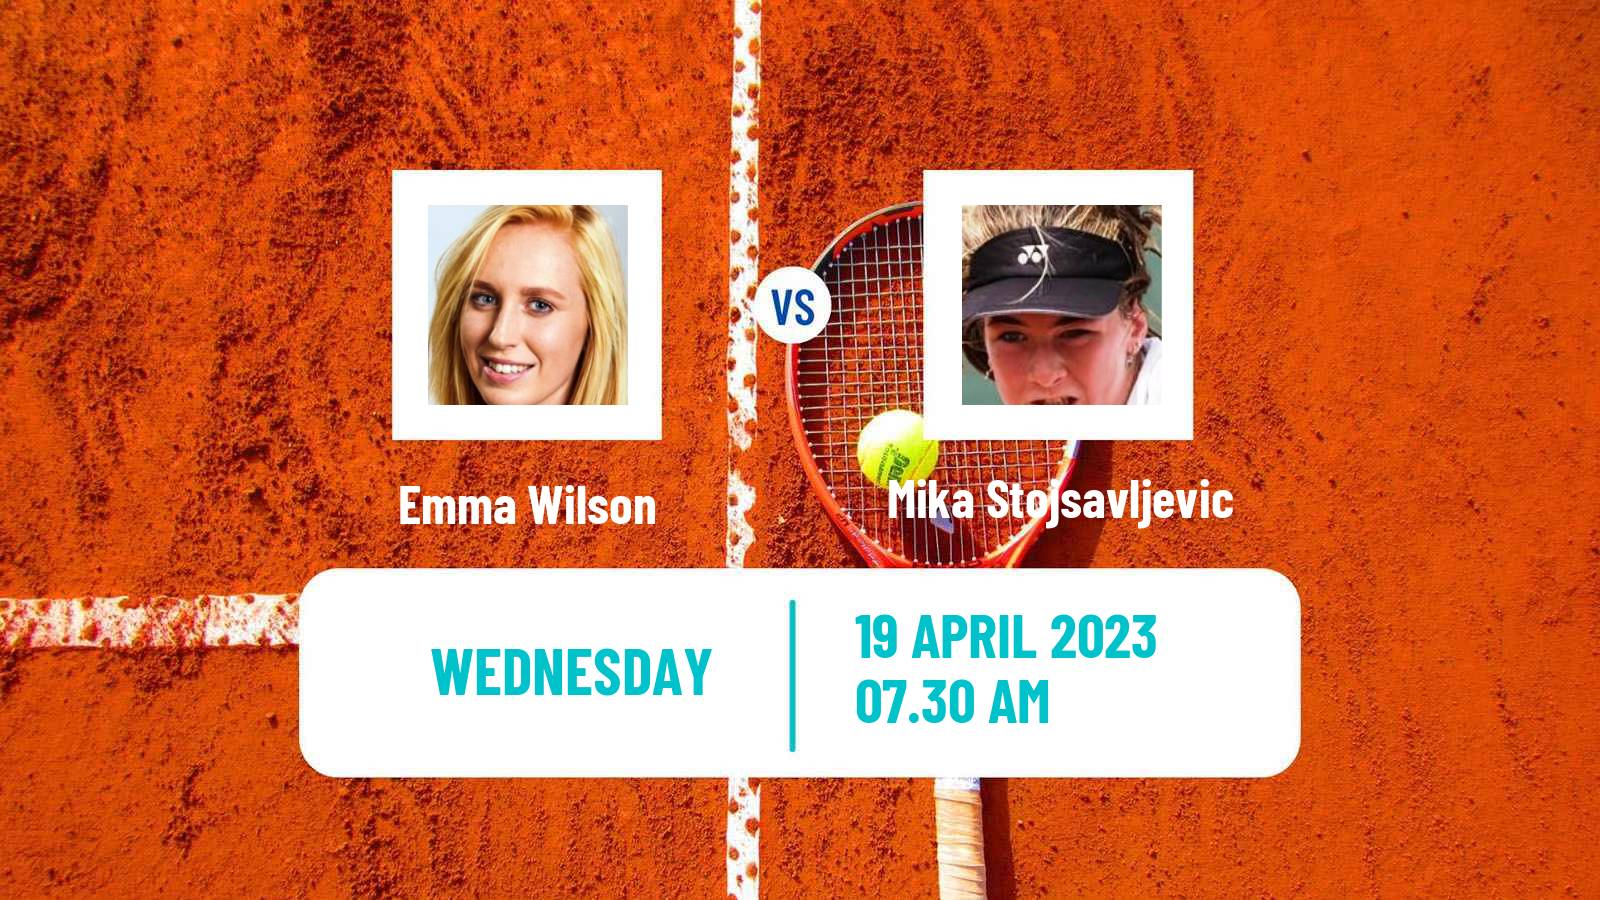 Tennis ITF Tournaments Emma Wilson - Mika Stojsavljevic